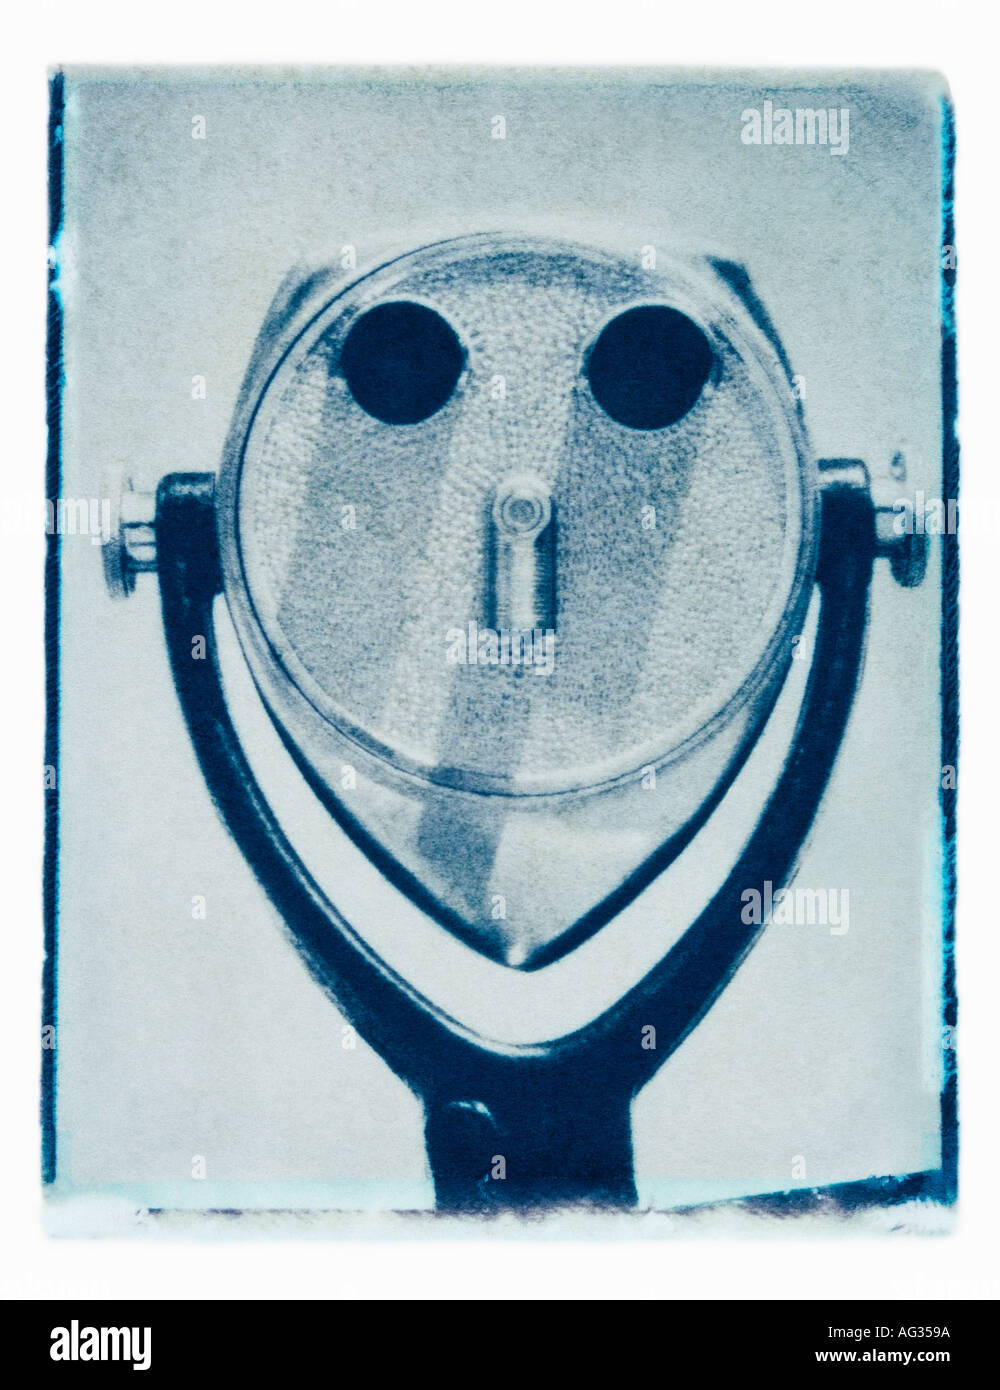 Polaroid transfer image of coin operated binoculars Stock Photo